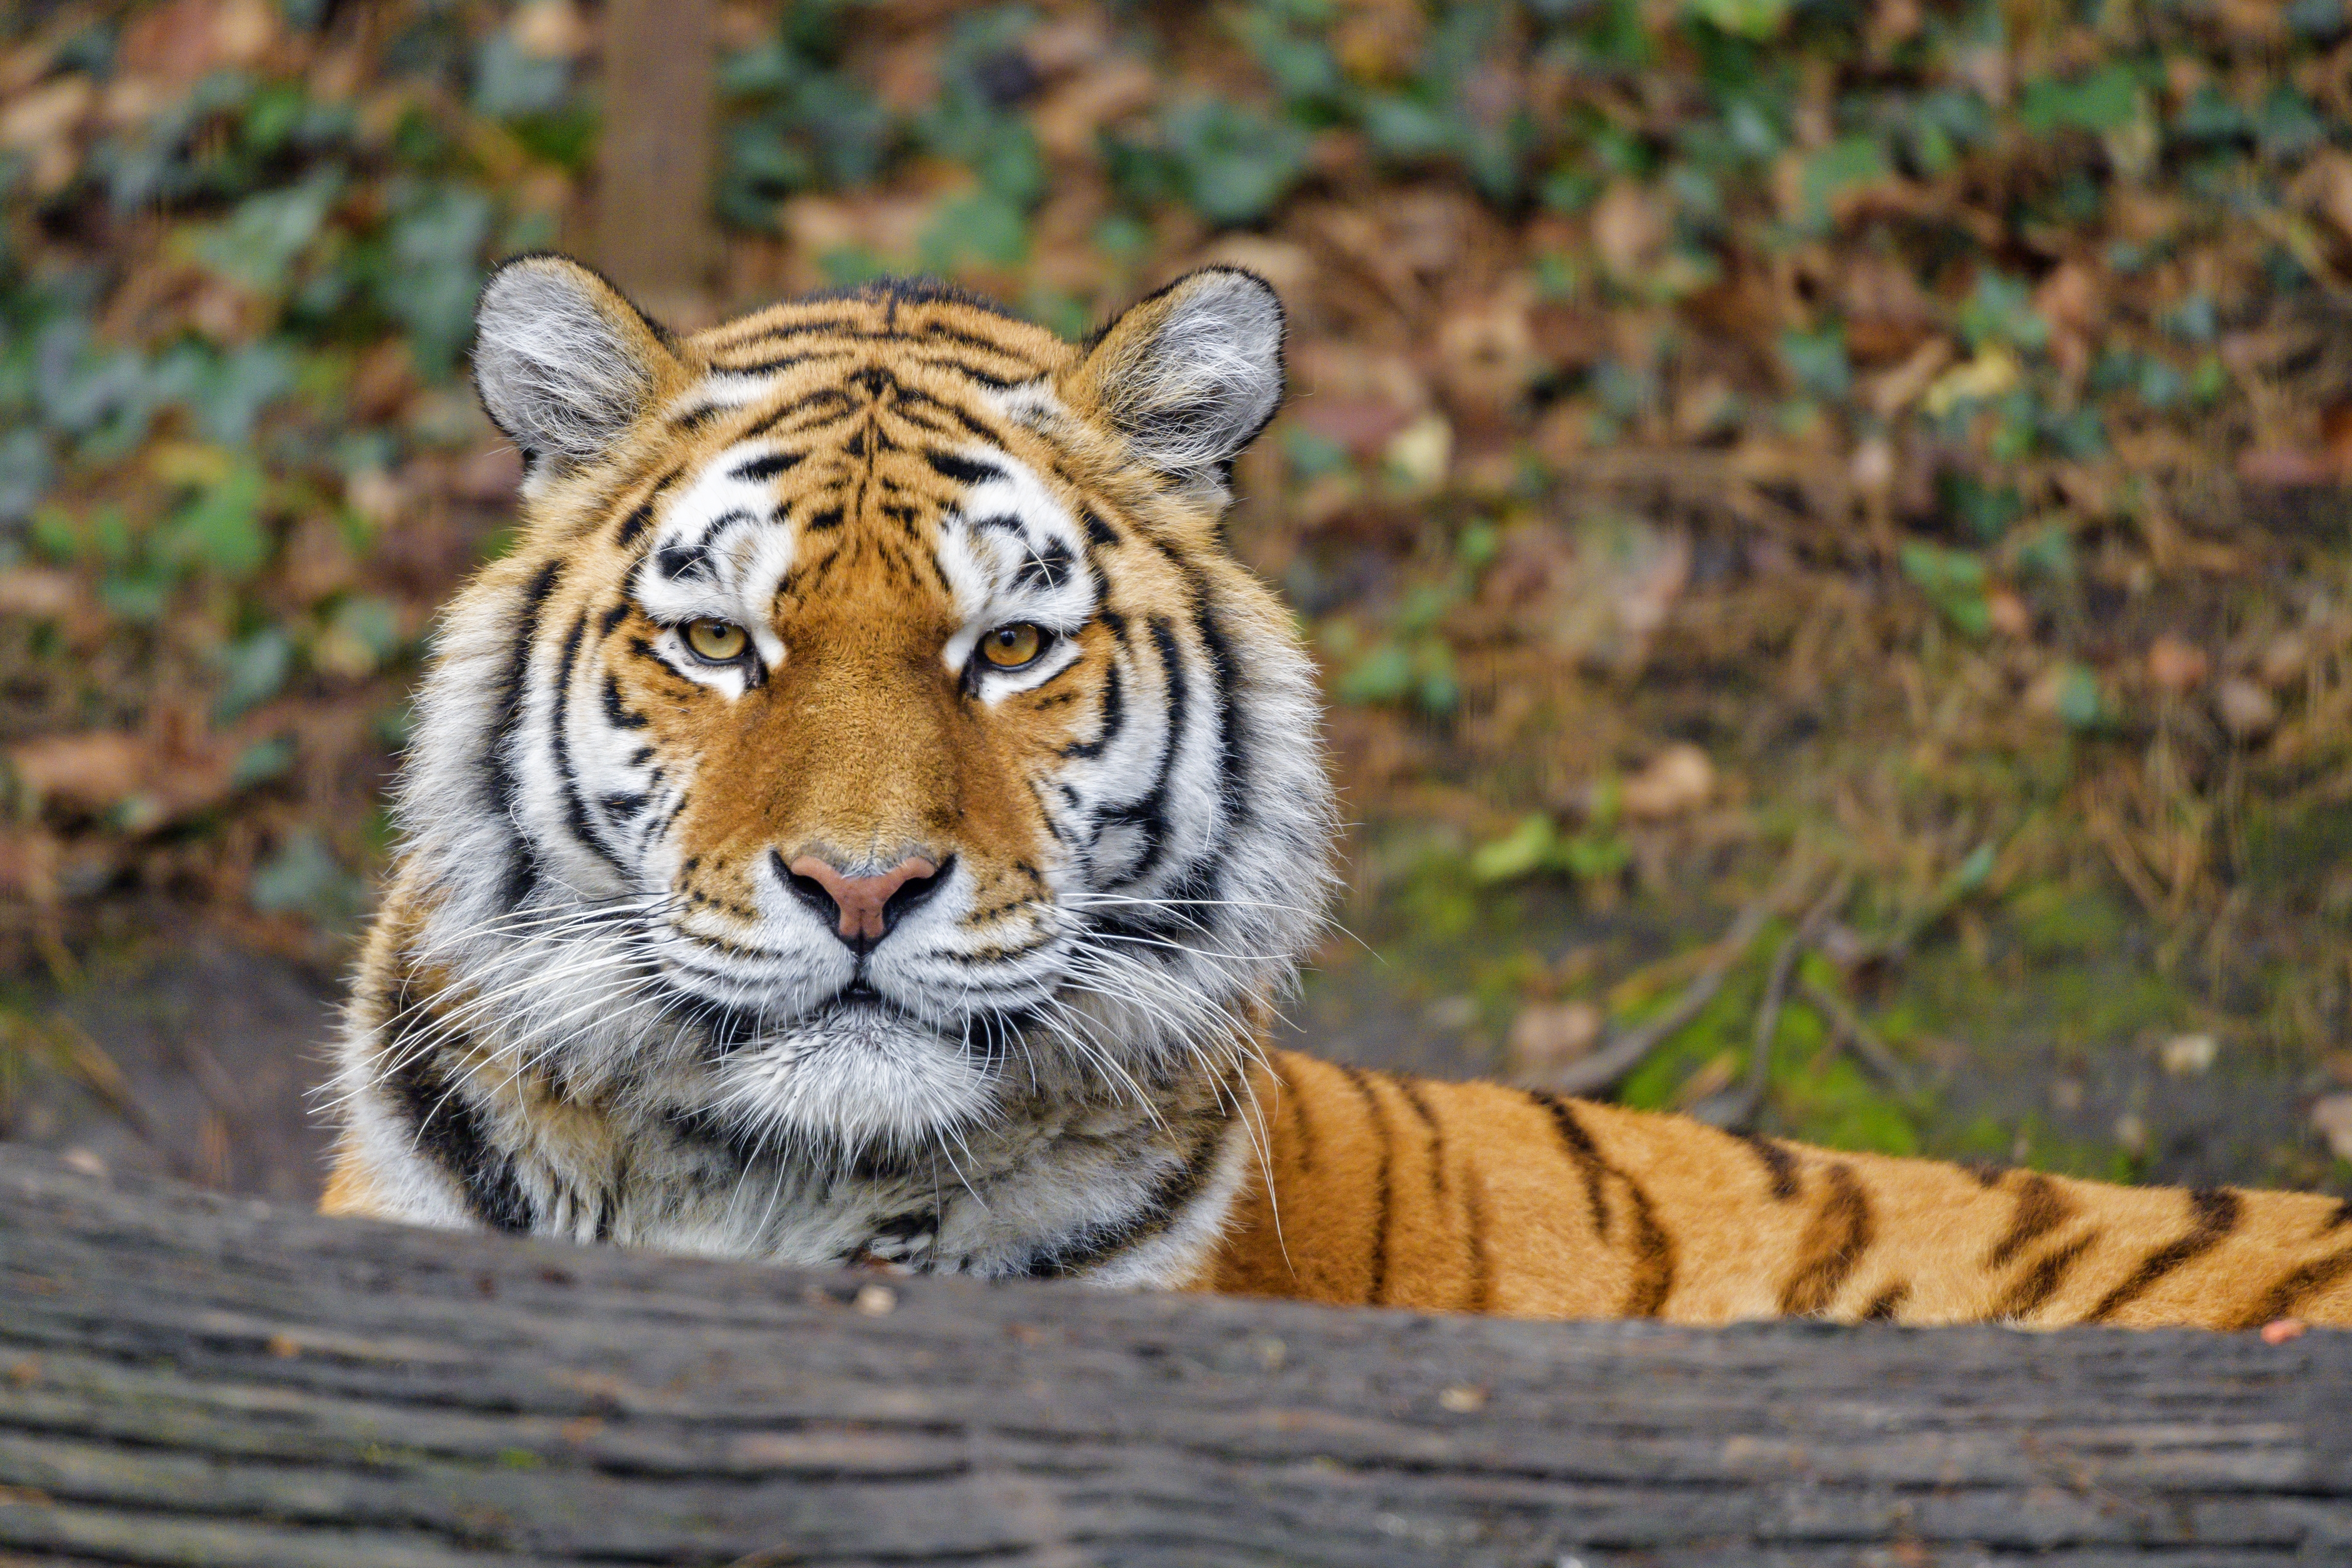 HD wallpaper, Siberian Tigress, Amur Tiger, 5K, Wild Animal, Predator, Big Cat, Forest, Zoo, Carnivore, Lying Down, Staring